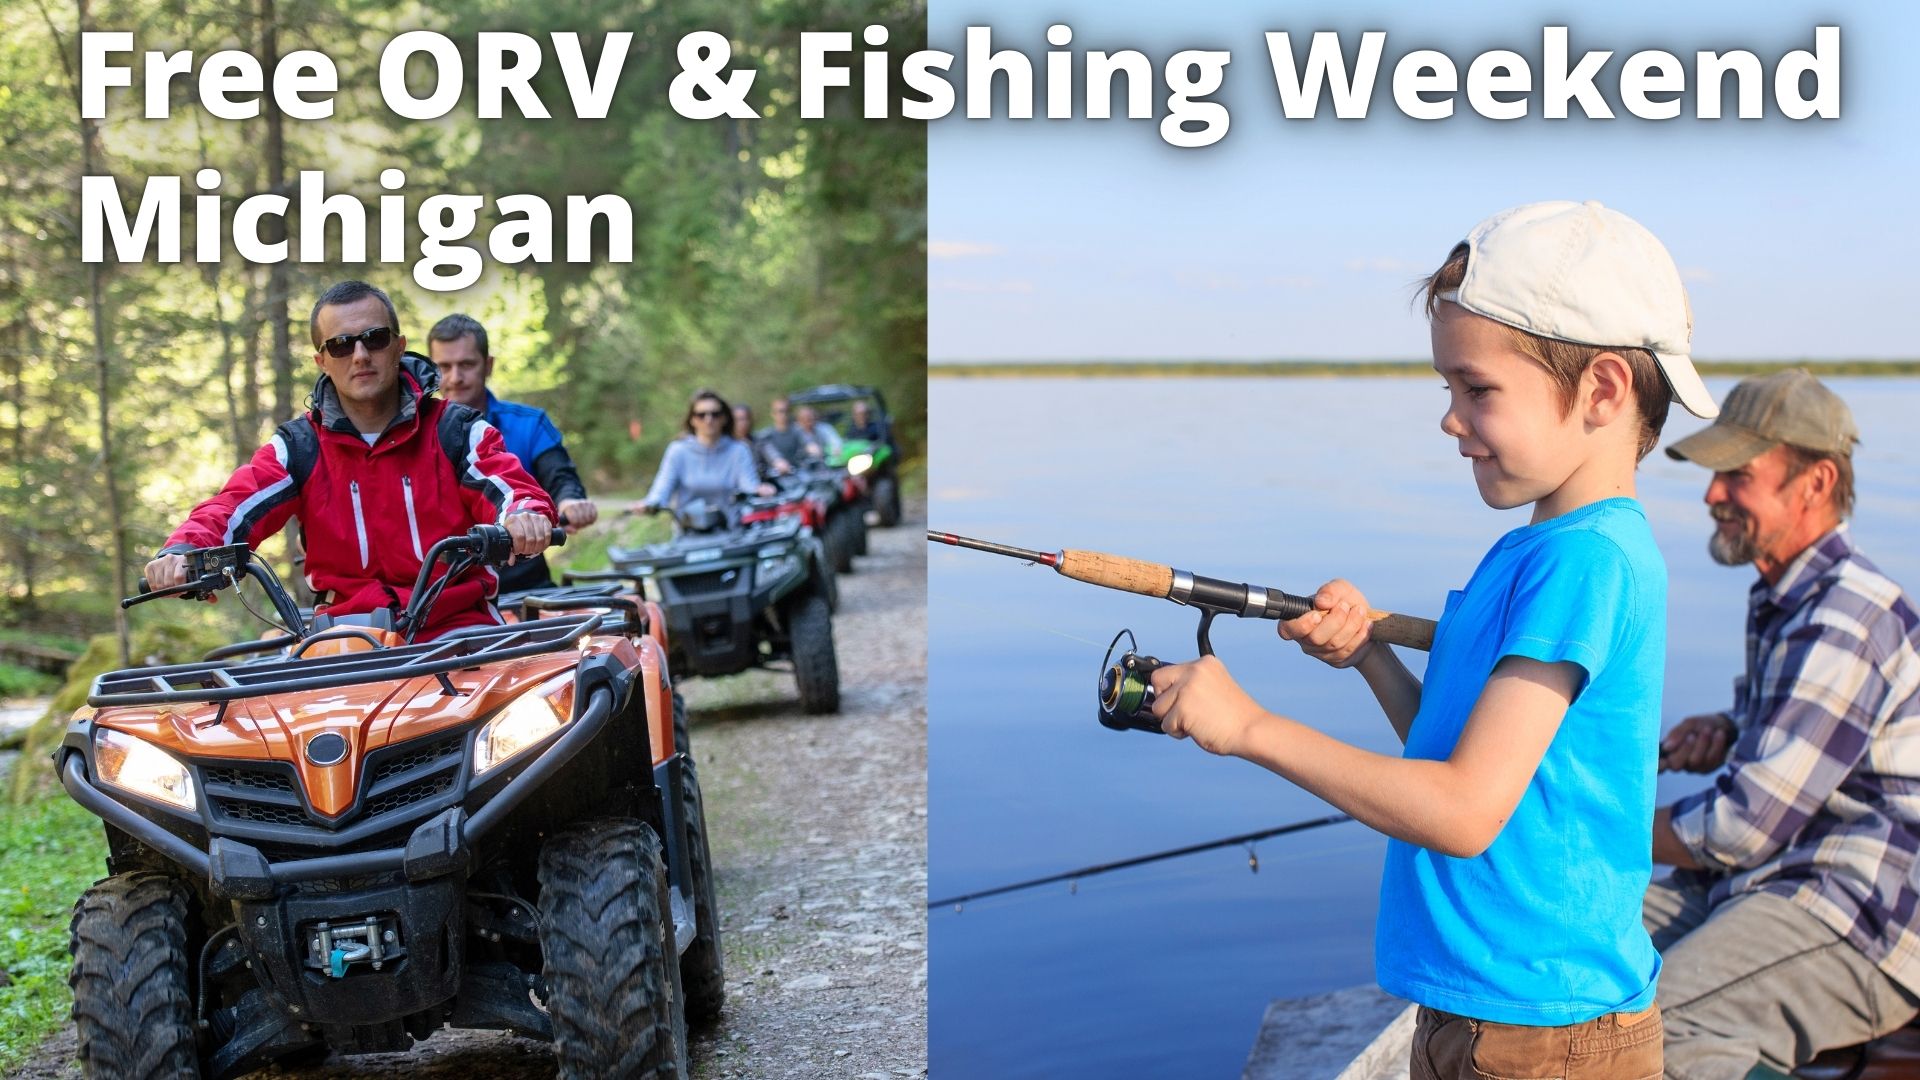 Michigan Free ORV and Fishing Weekend